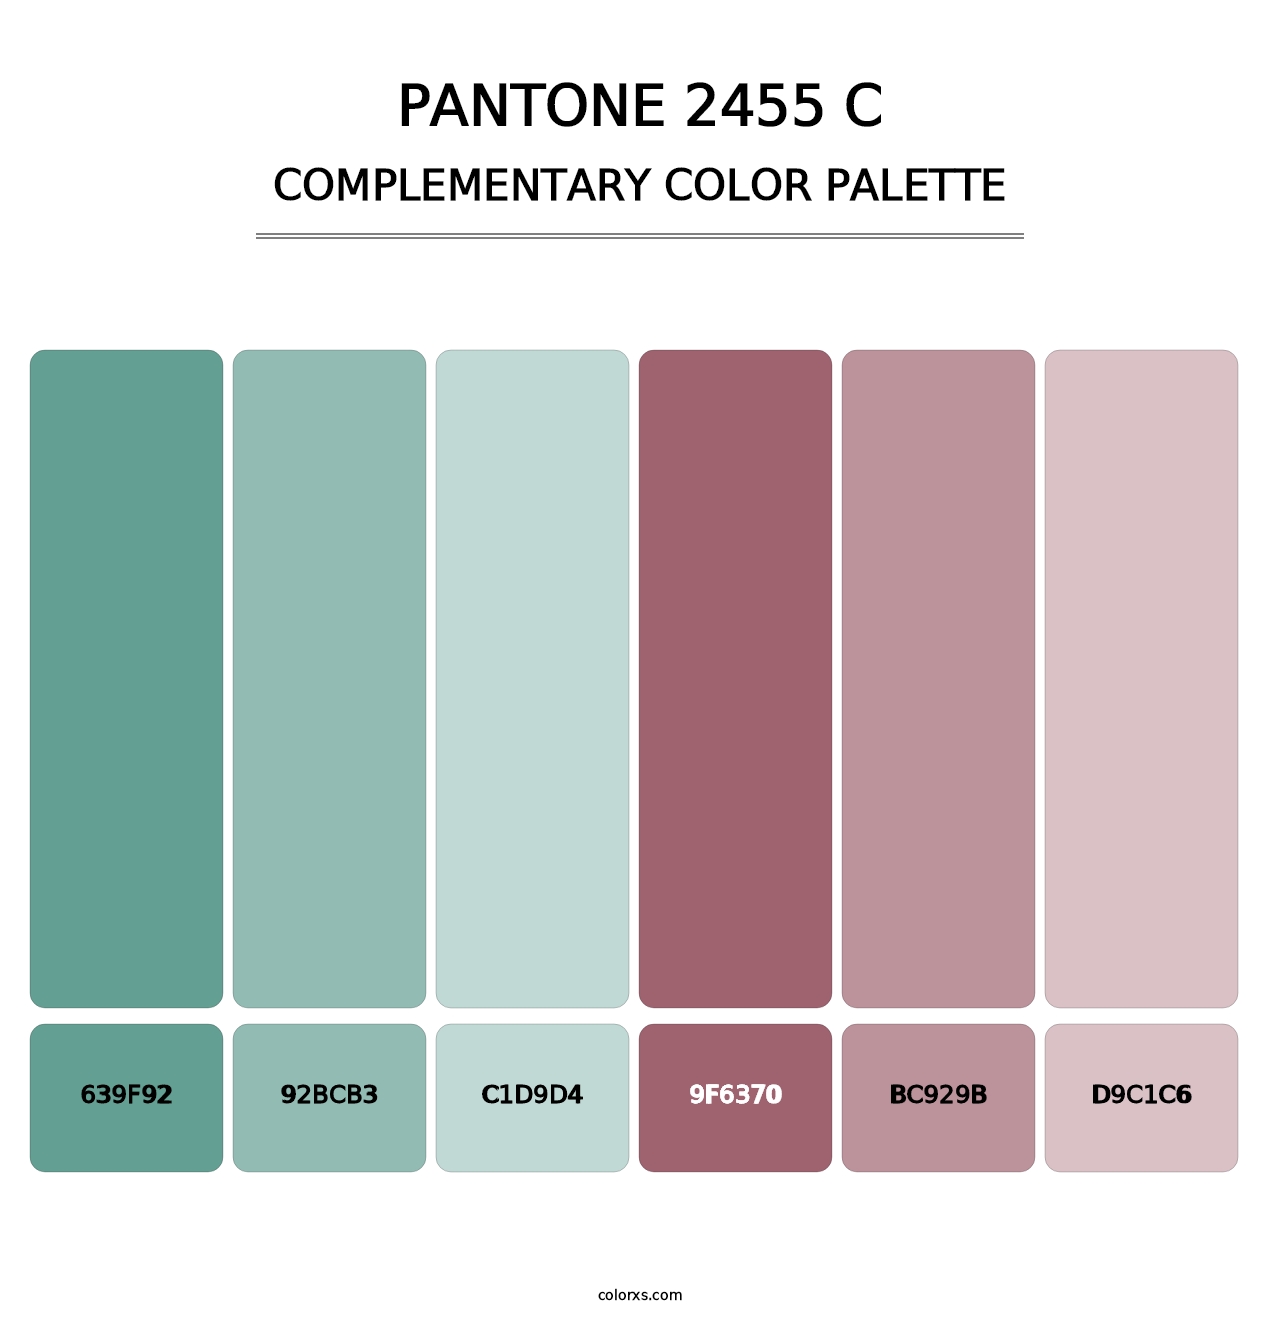 PANTONE 2455 C - Complementary Color Palette